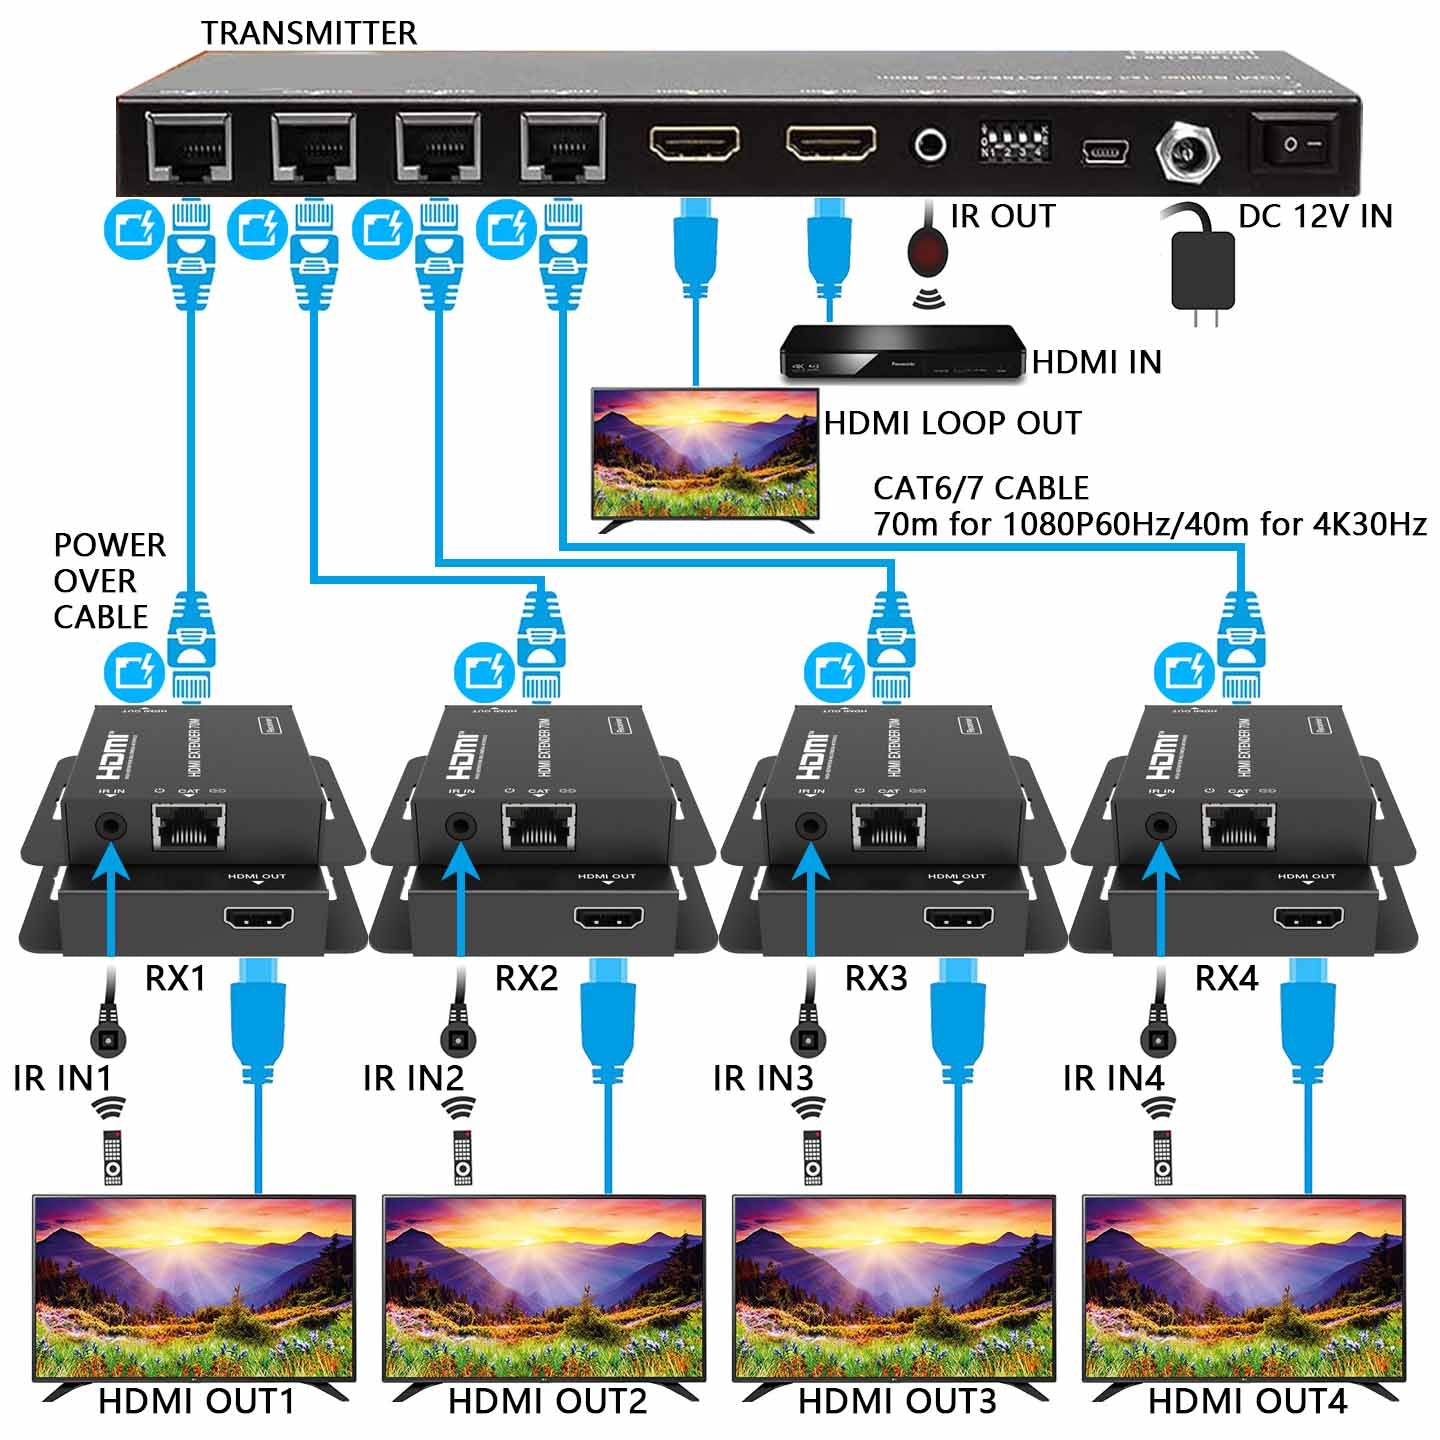 1x4 HDMI Splitter Extender over Cat6/7 Cable 70m 1080P 60Hz connection